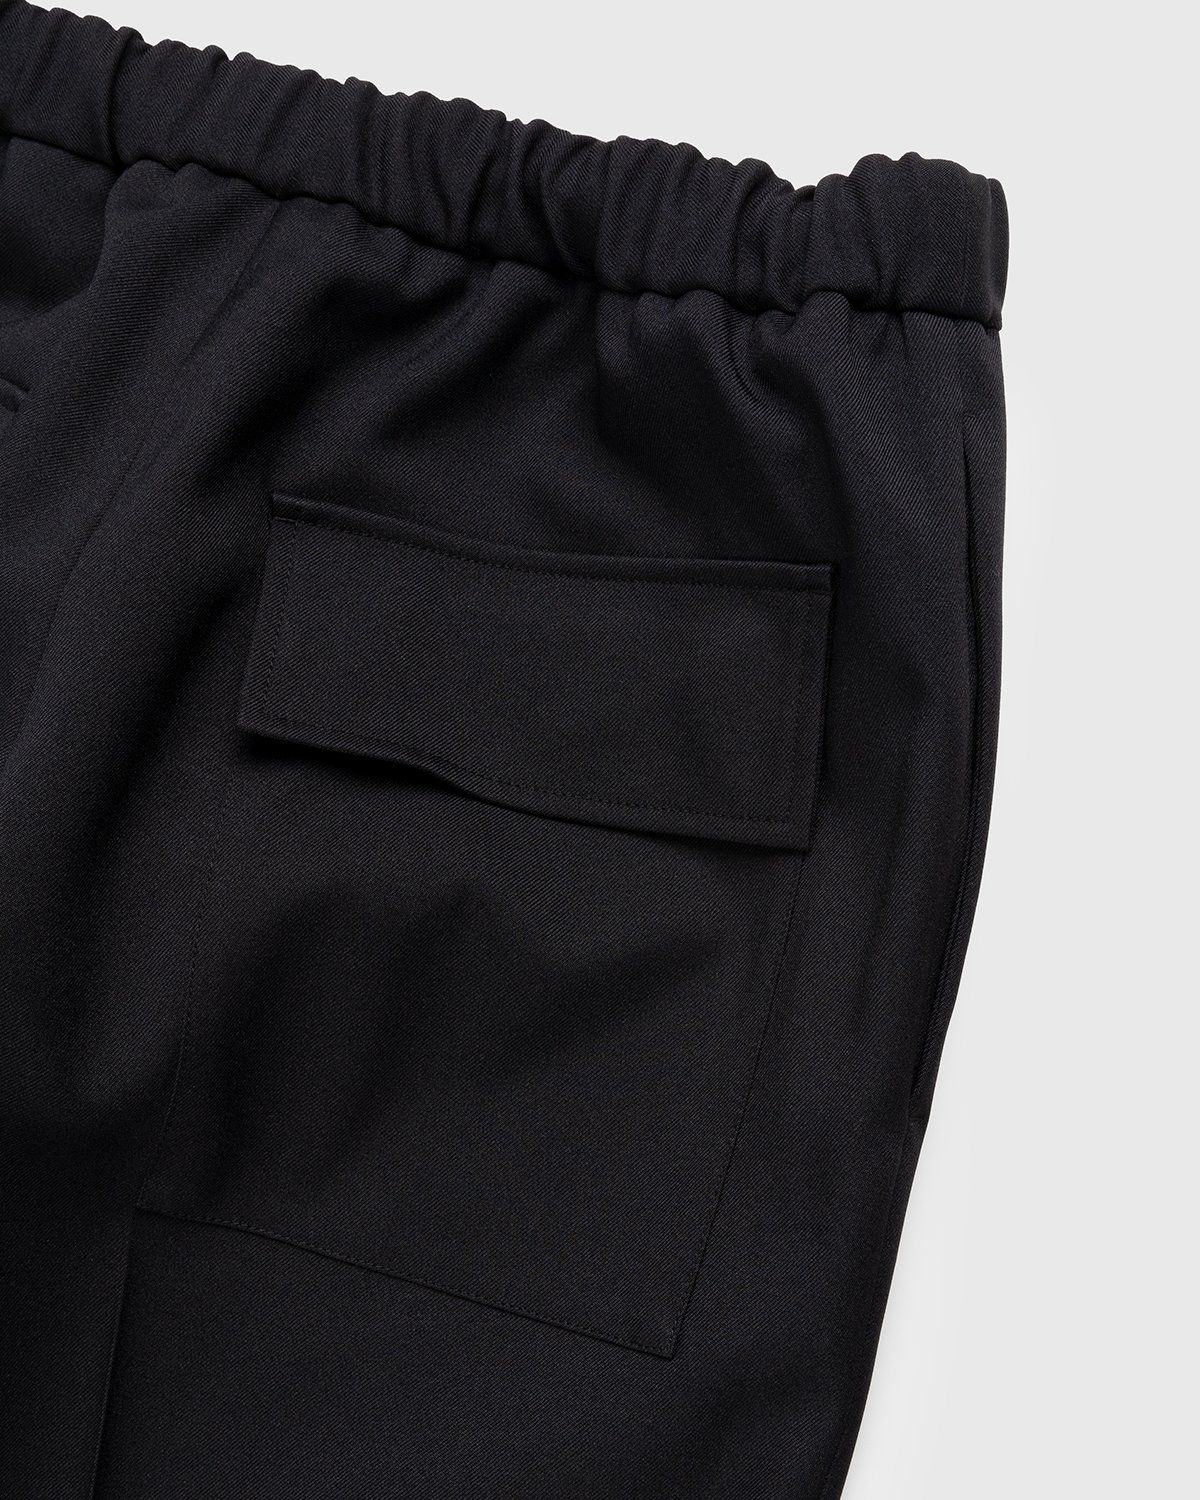 Jil Sander – Trouser D 09 AW 20 Black - Pants - Black - Image 4